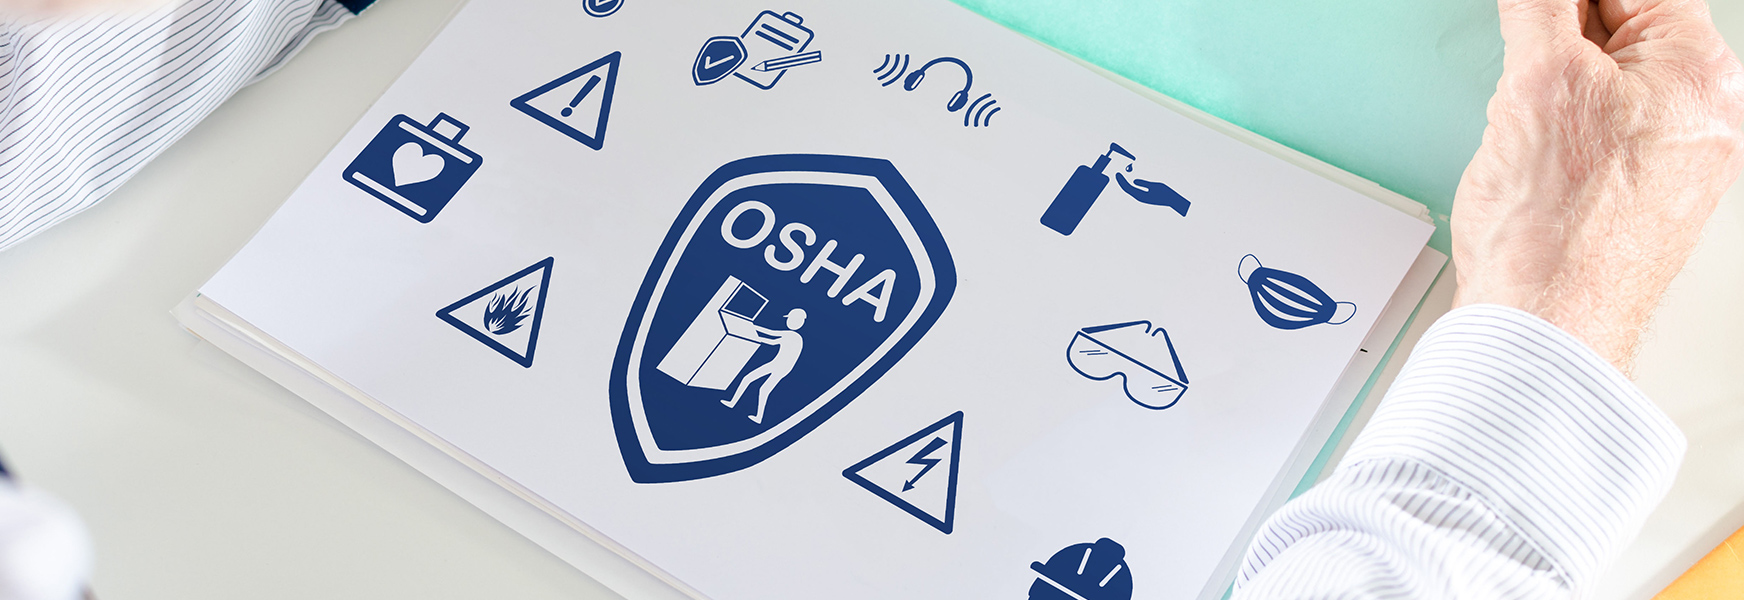 OSHA Safety Binder